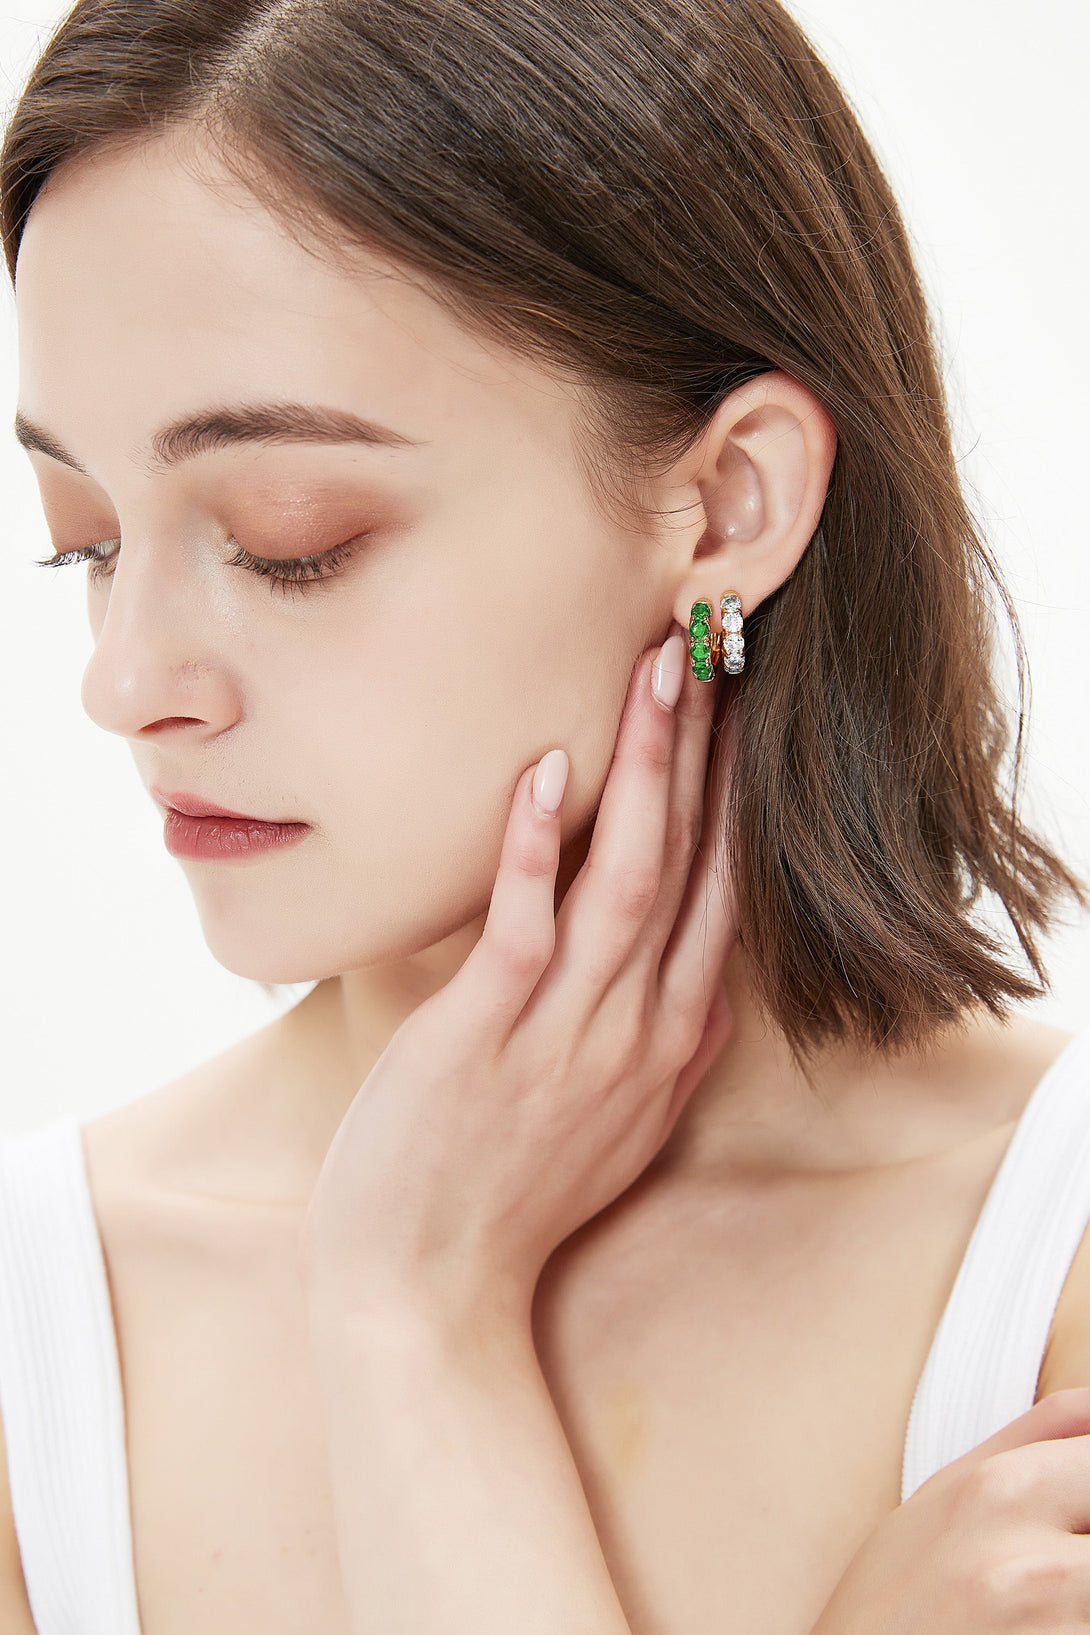 Daniela Gold Huggie Hoop Emerald Zirconia Earrings - Classicharms